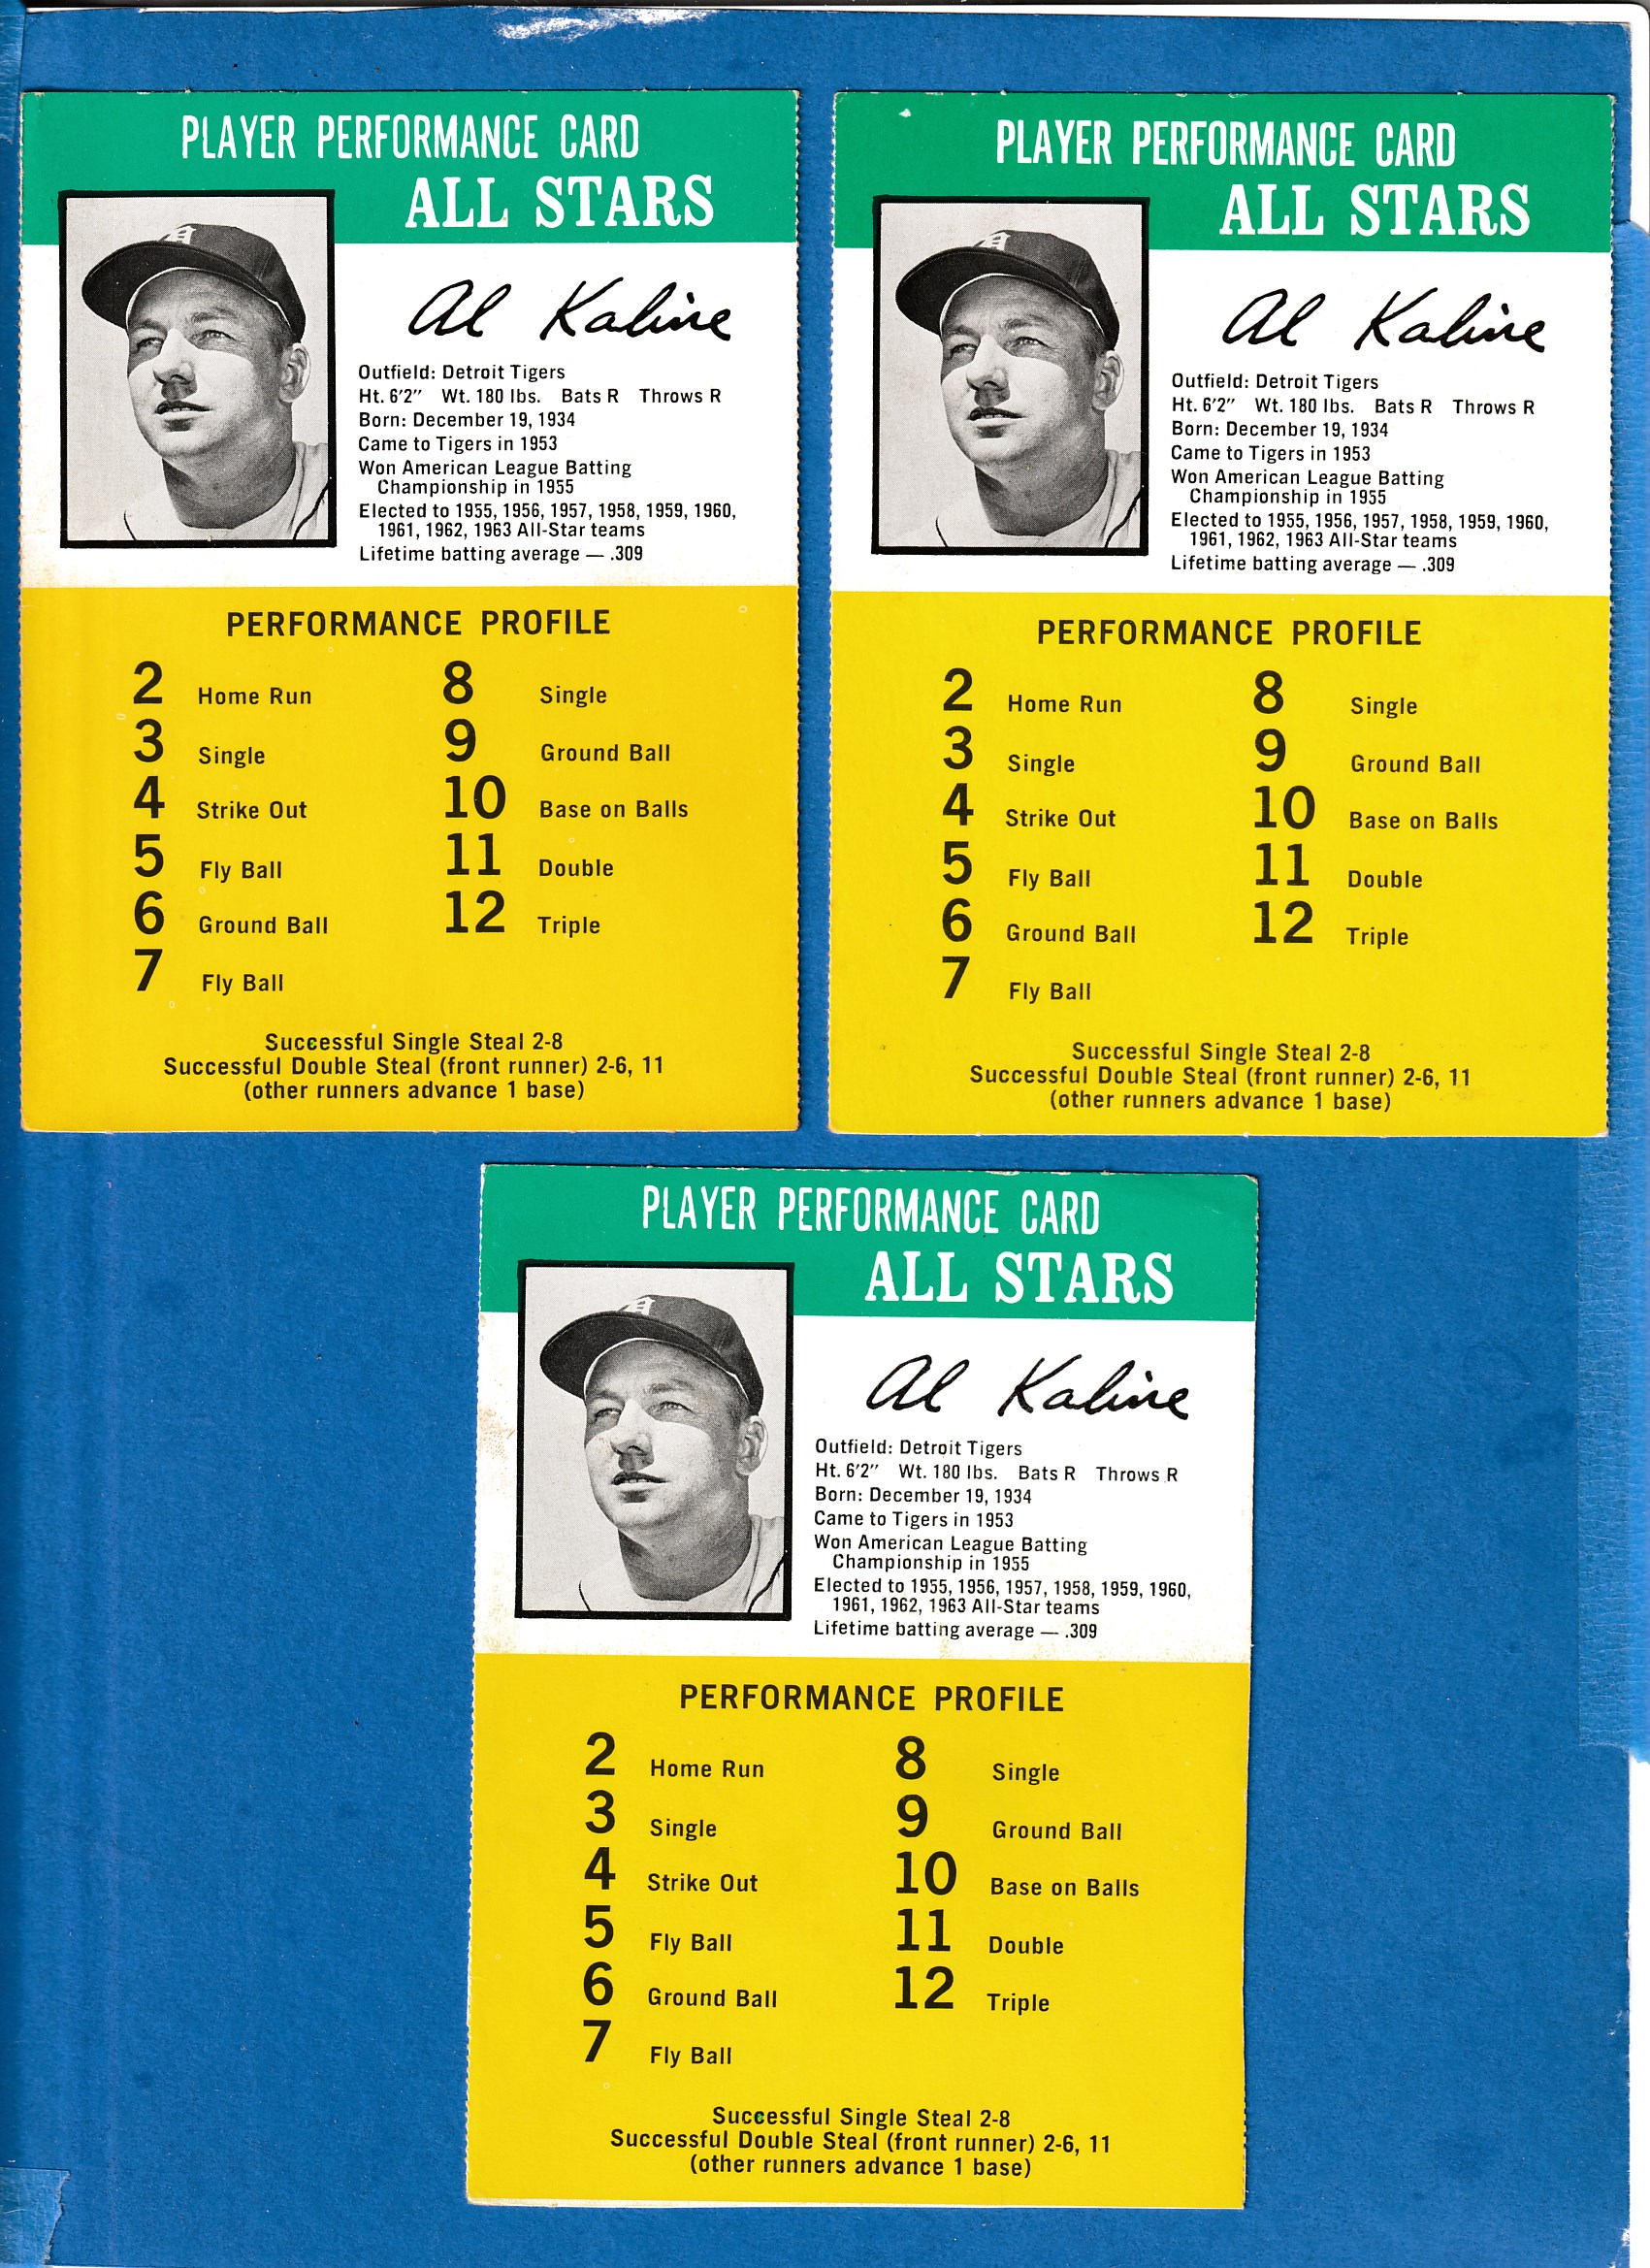 1964 Challenge the Yankees #31 Al Kaline [.309] (Tigers) Baseball cards value